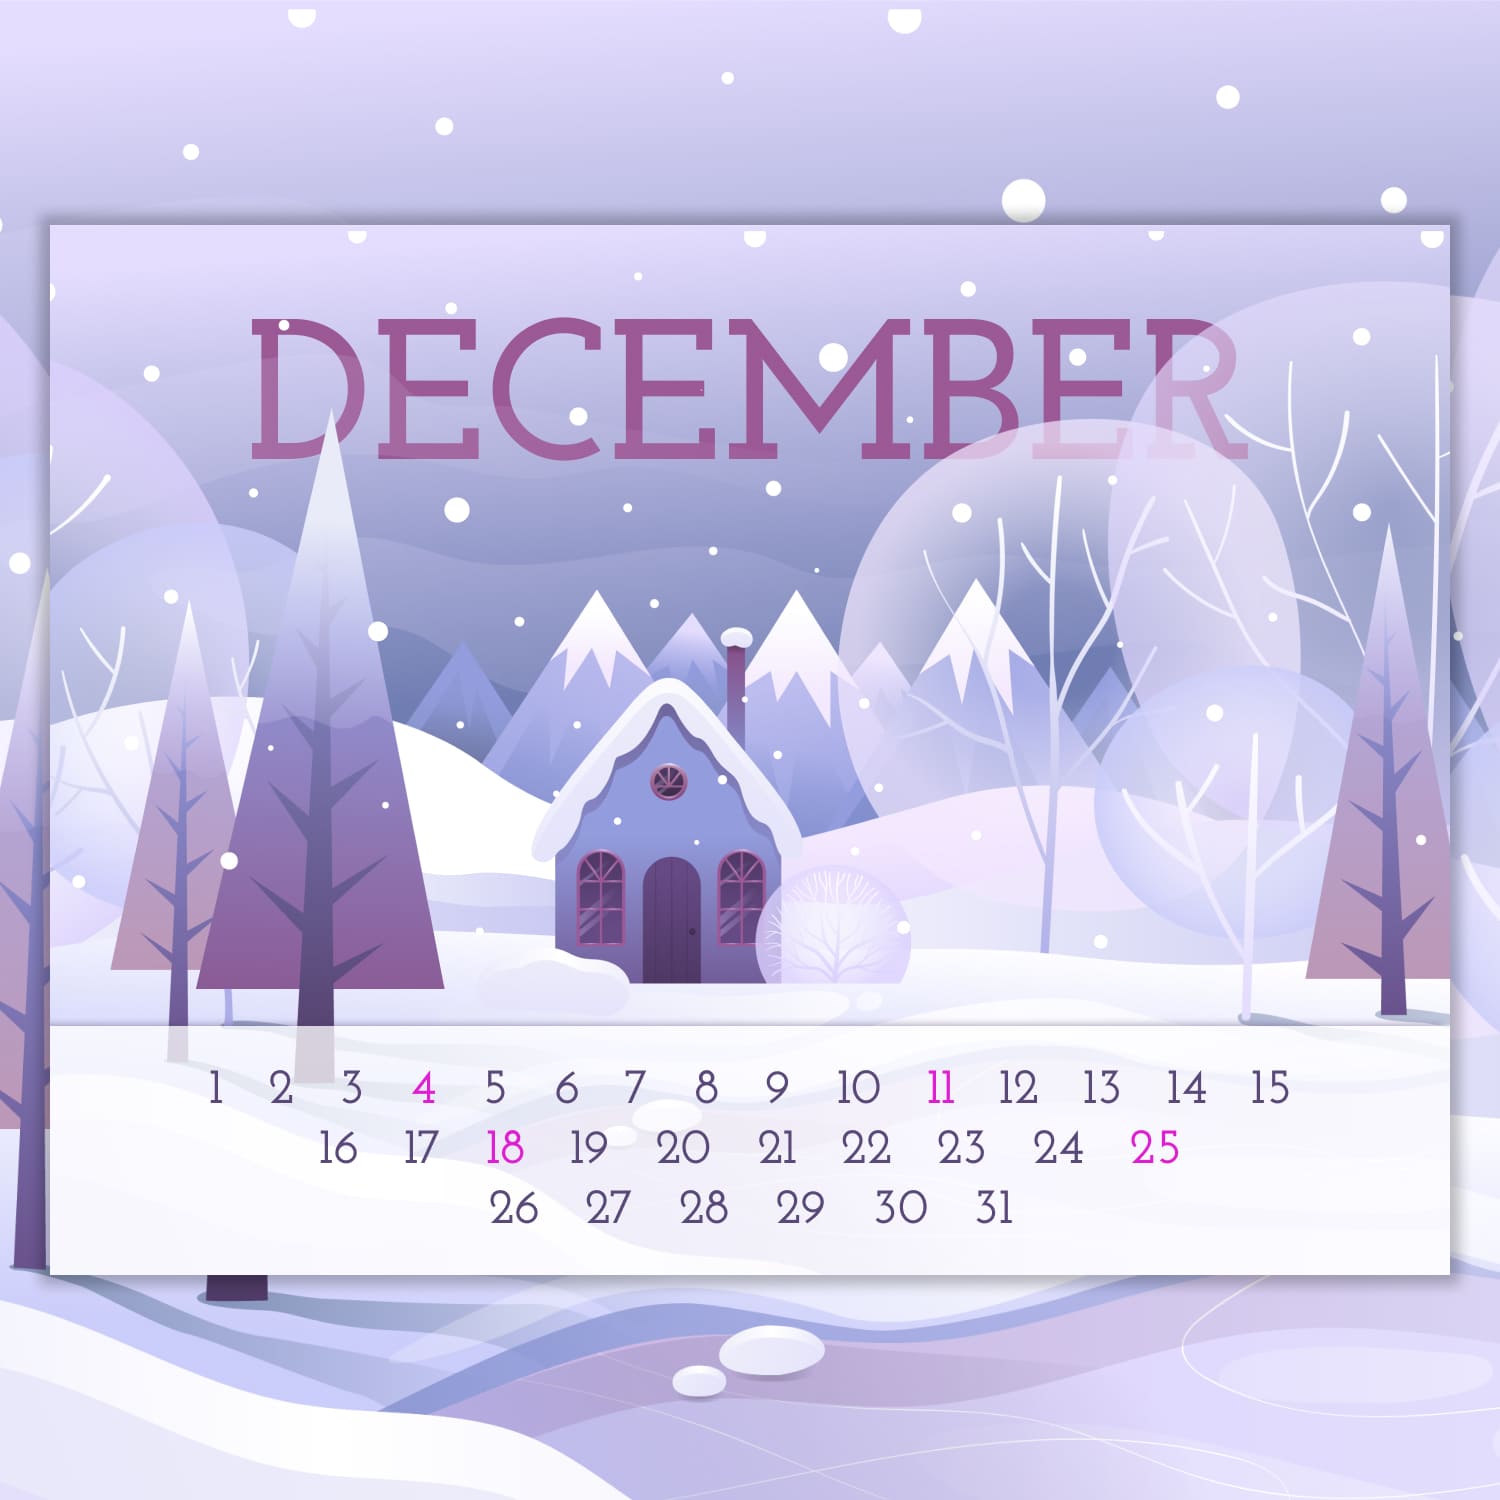 Free December Printable Calendar Cover.